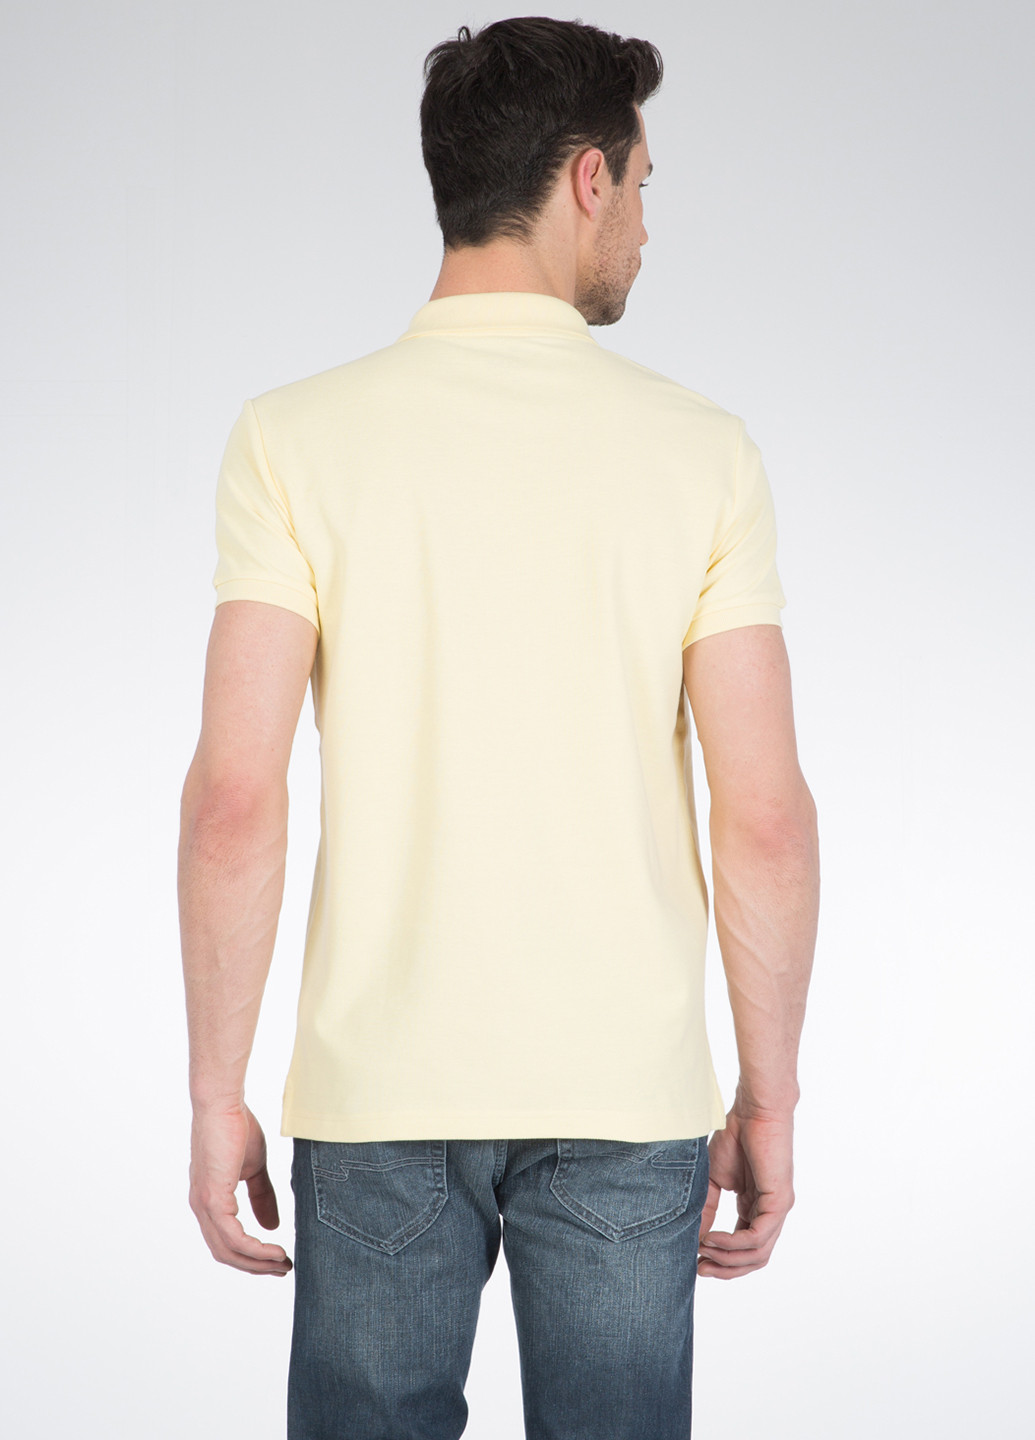 Желтая футболка-поло для мужчин Colin's однотонная